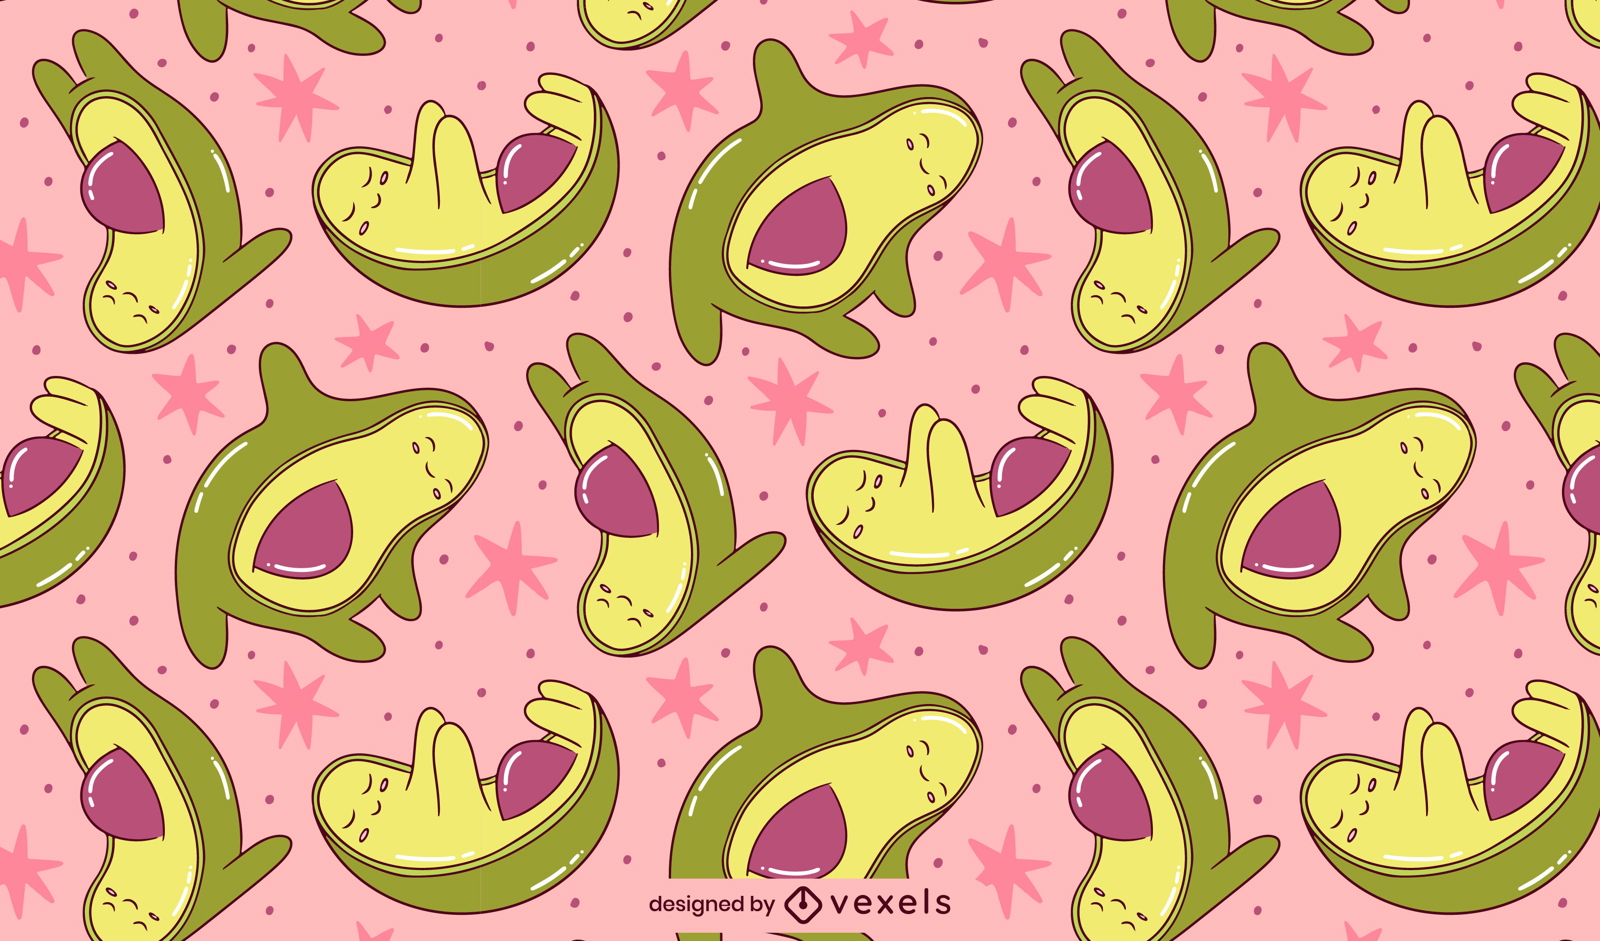 Funny avocado vegetable pattern design